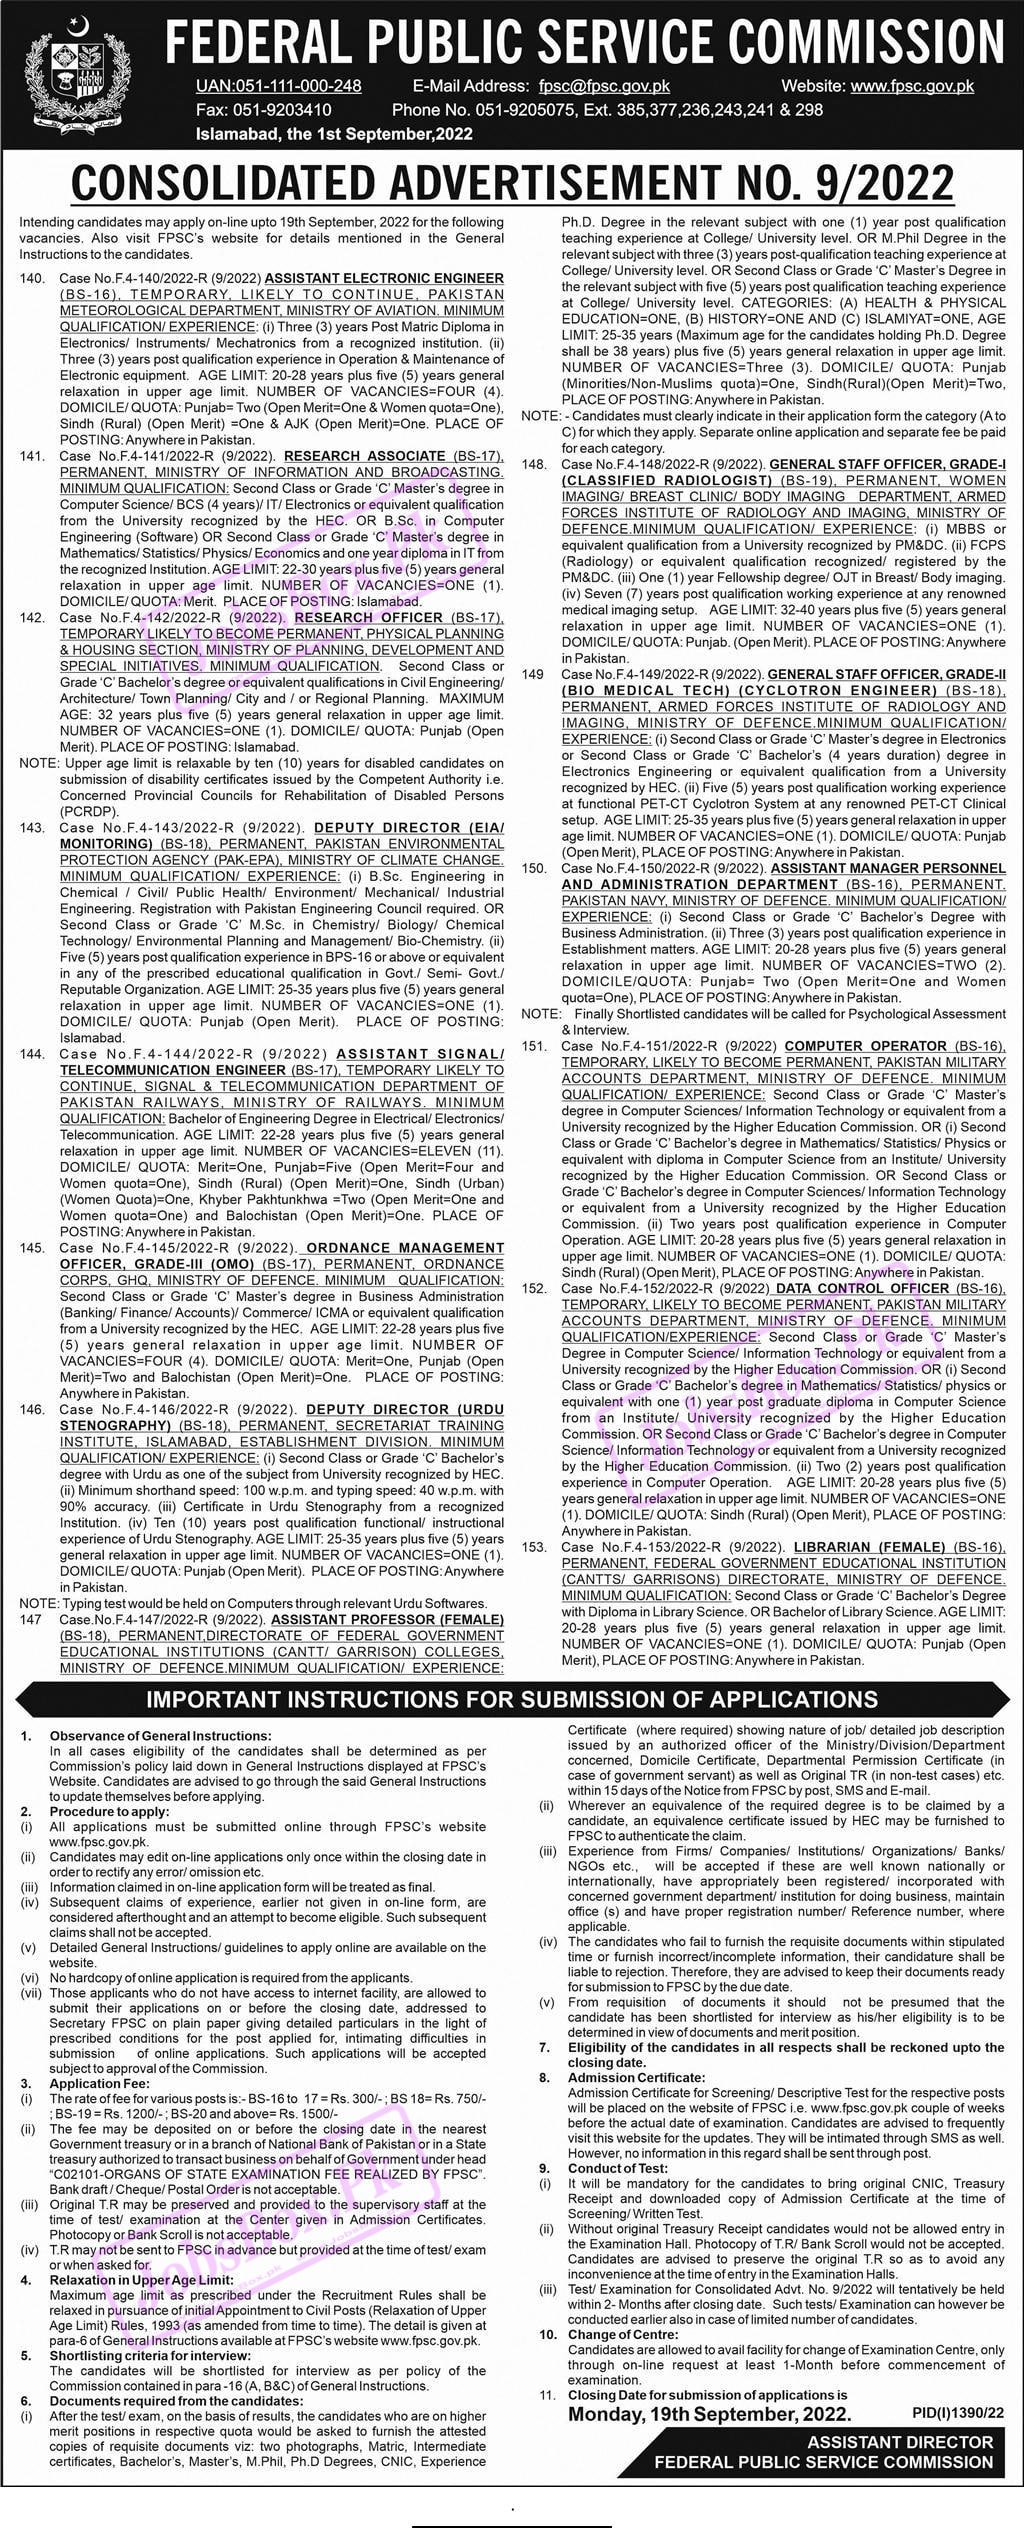 fpsc.gov.pk Online Apply - FPSC Jobs 2022 Consolidated Advertisement No. 09 - FPSC Latest Jobs - FPSC Current Jobs 2022